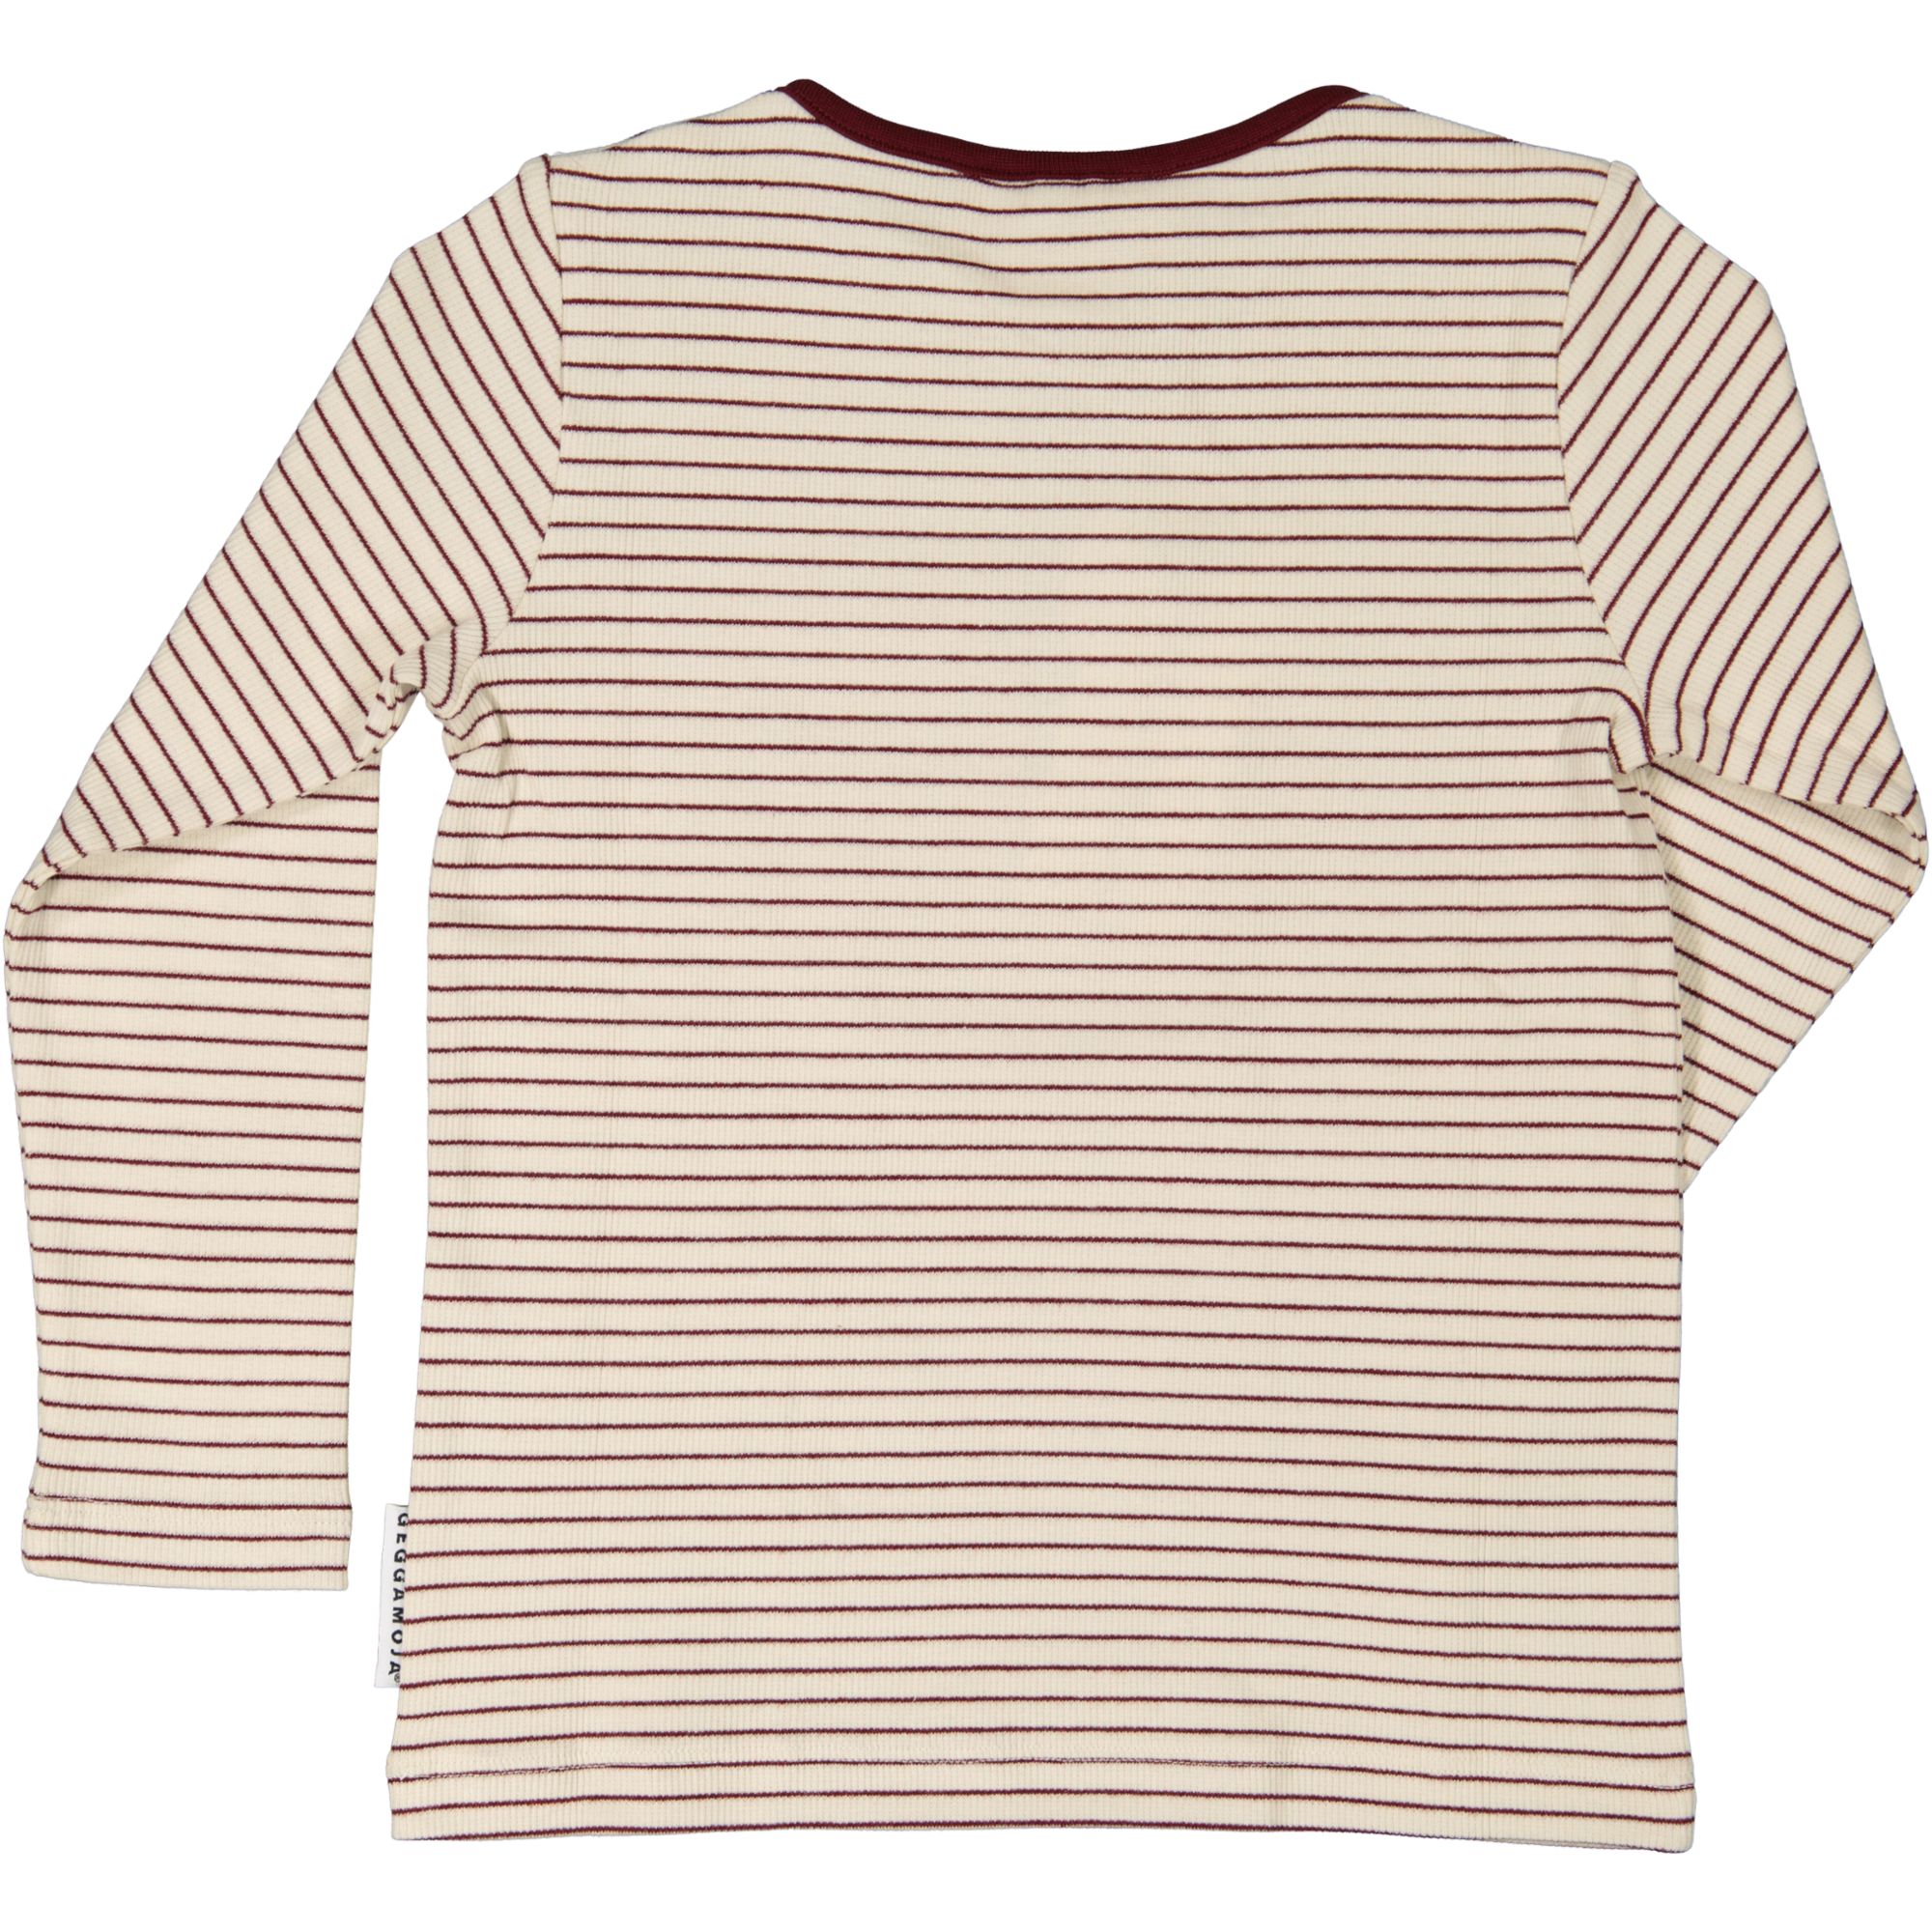 Grandpa sweater Burgundy stripe